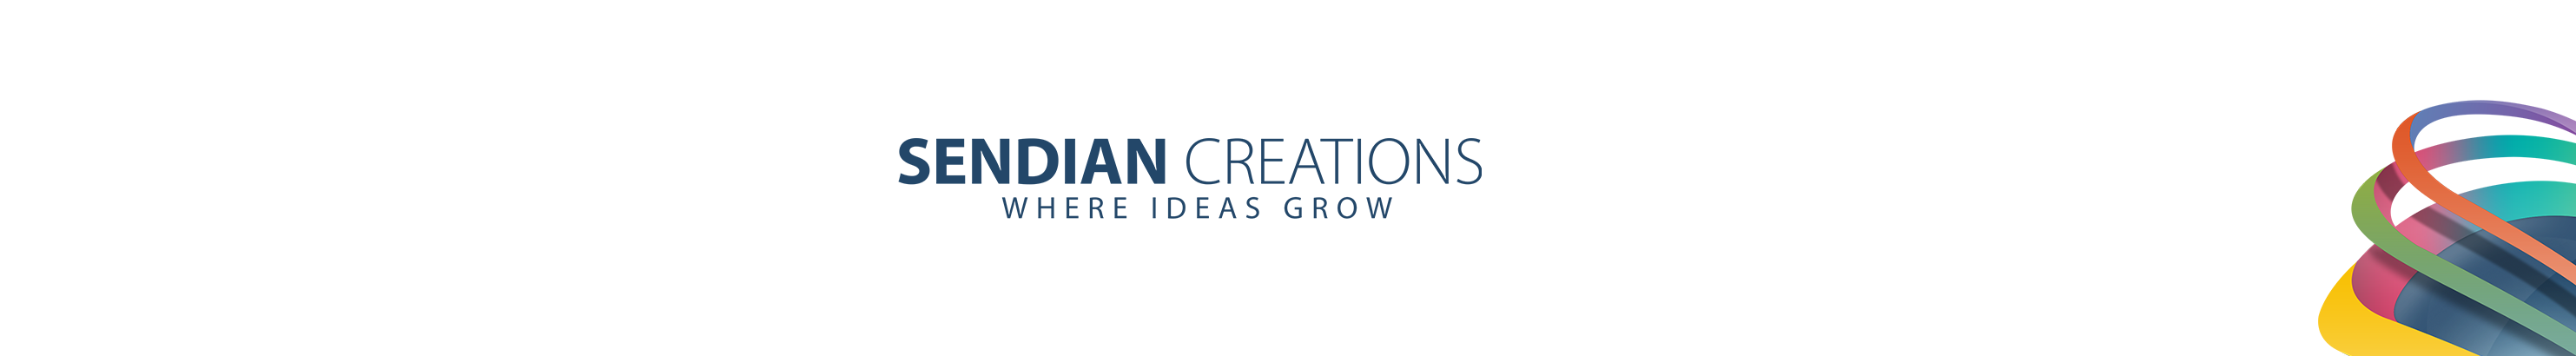 Sendian Creations's profile banner